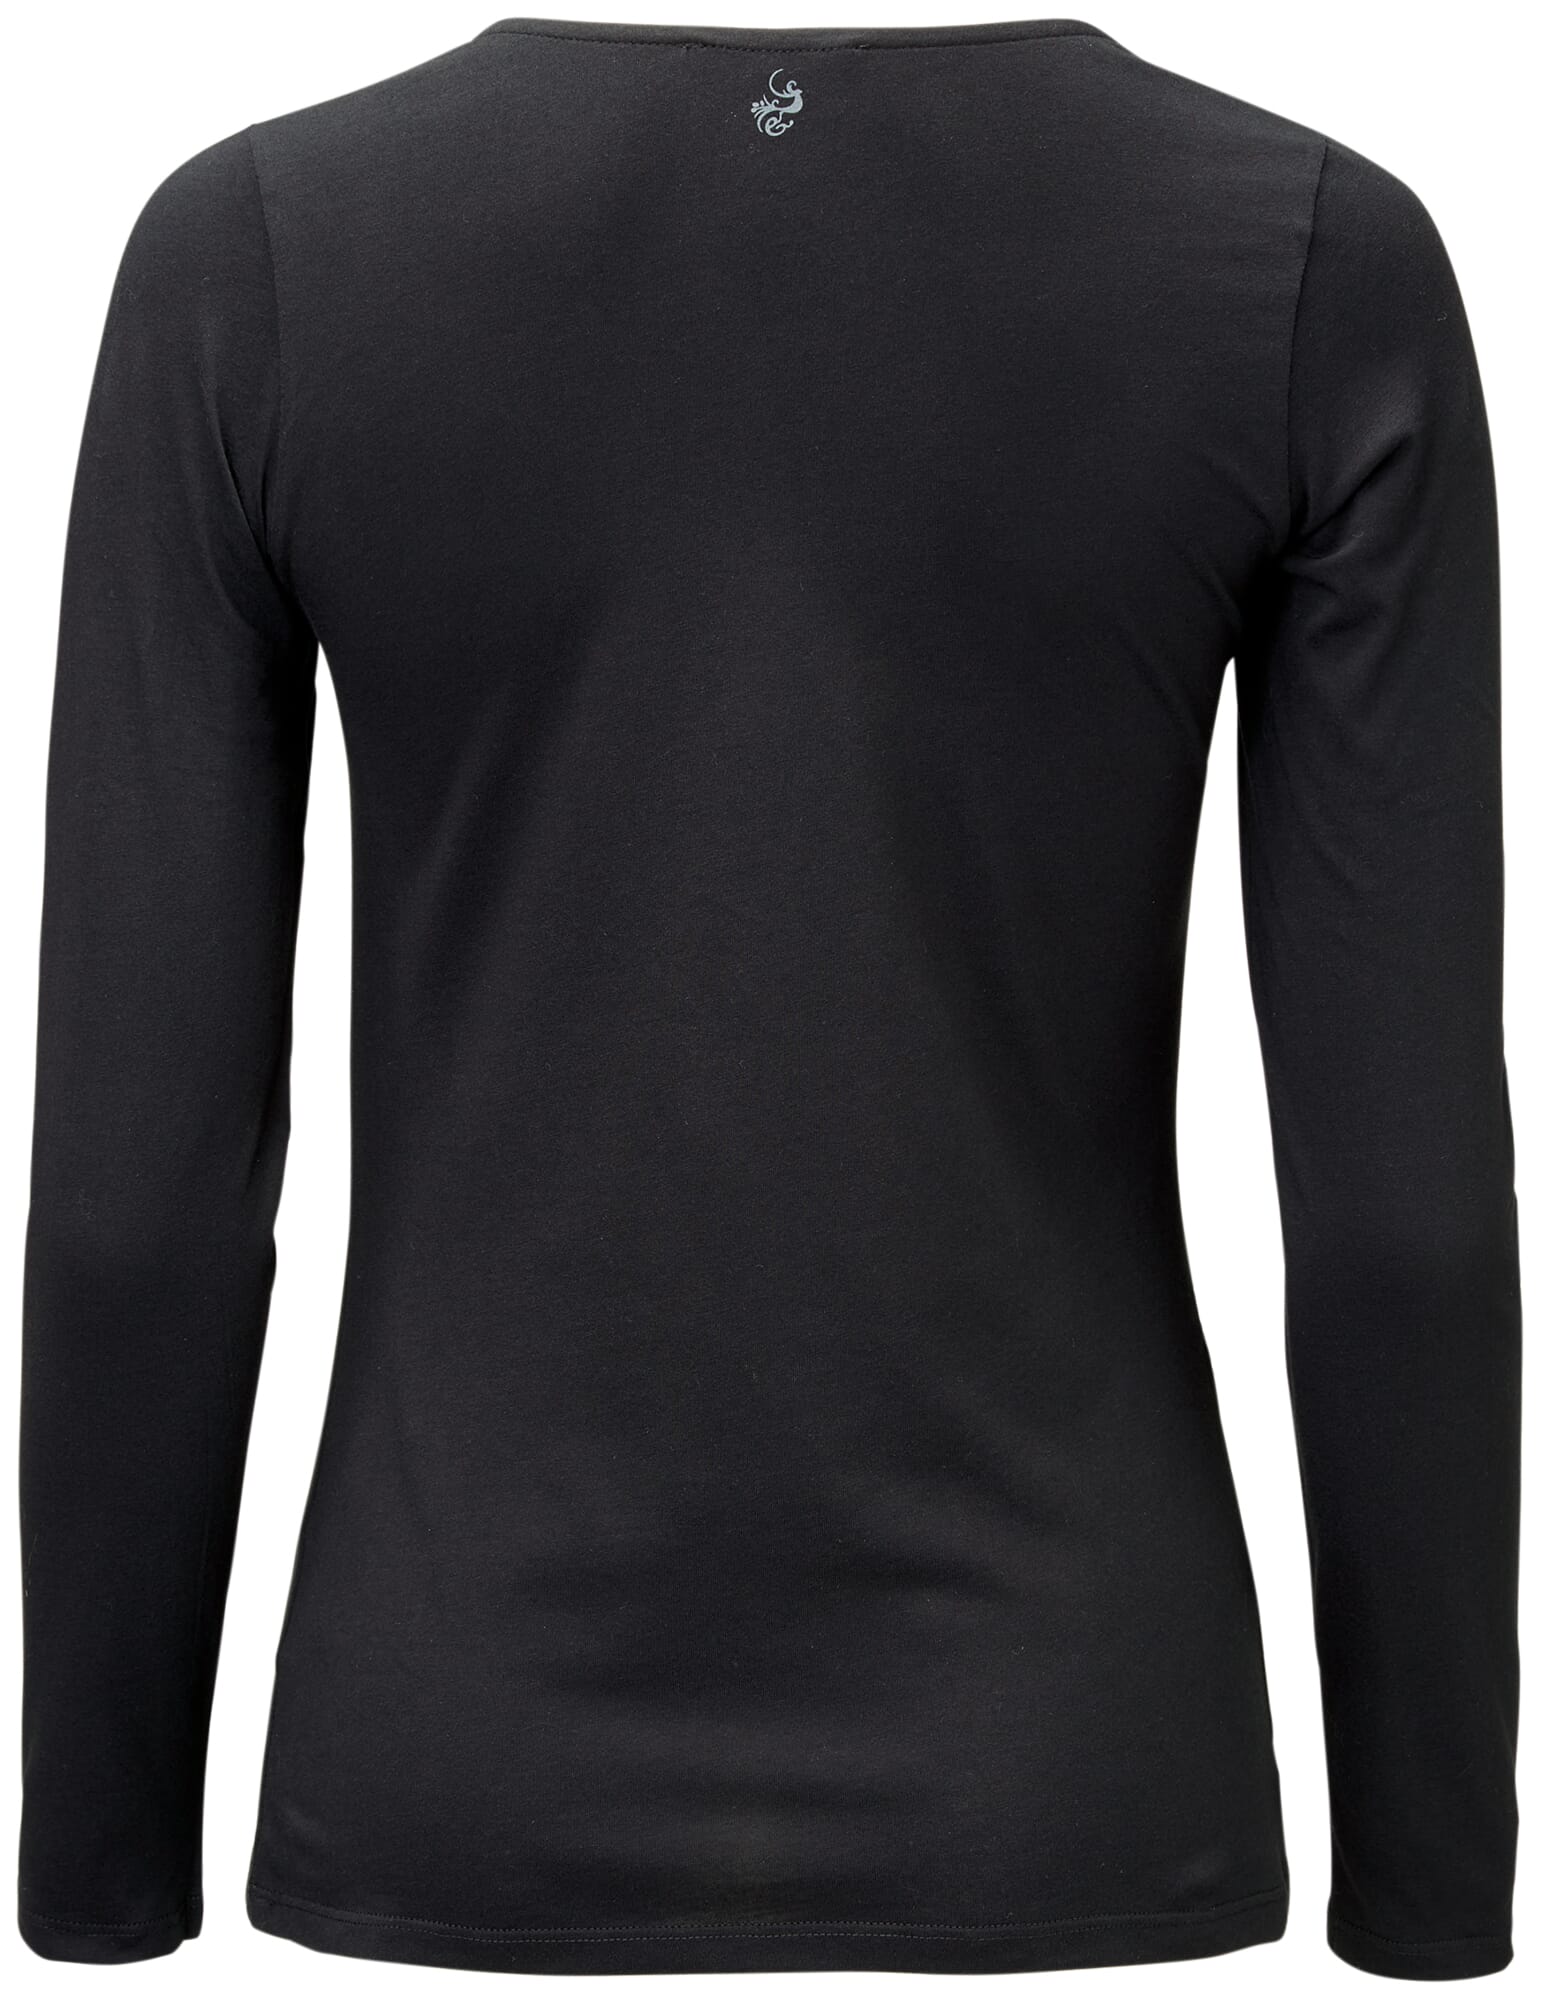 Ladies shirt Cascade, Manufactum Black 